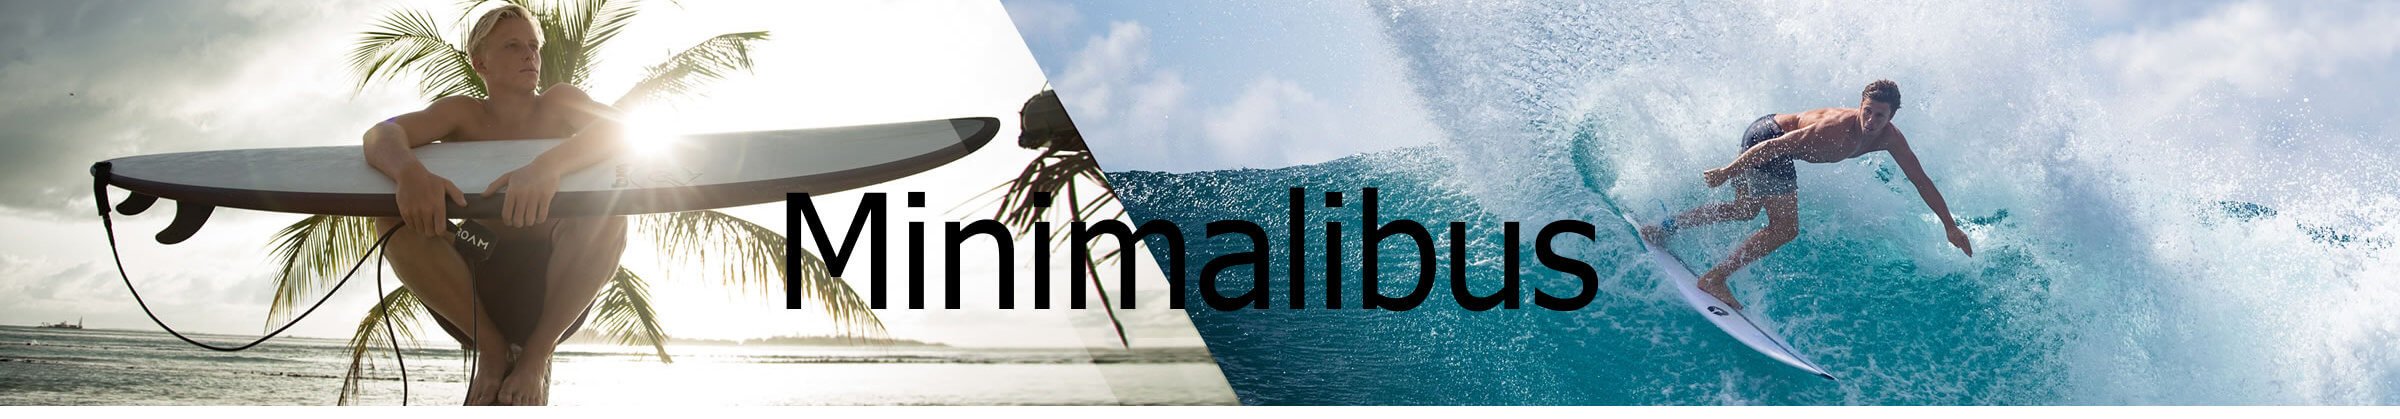 Mini Malibu Guide Buying Advice Surfboard Header